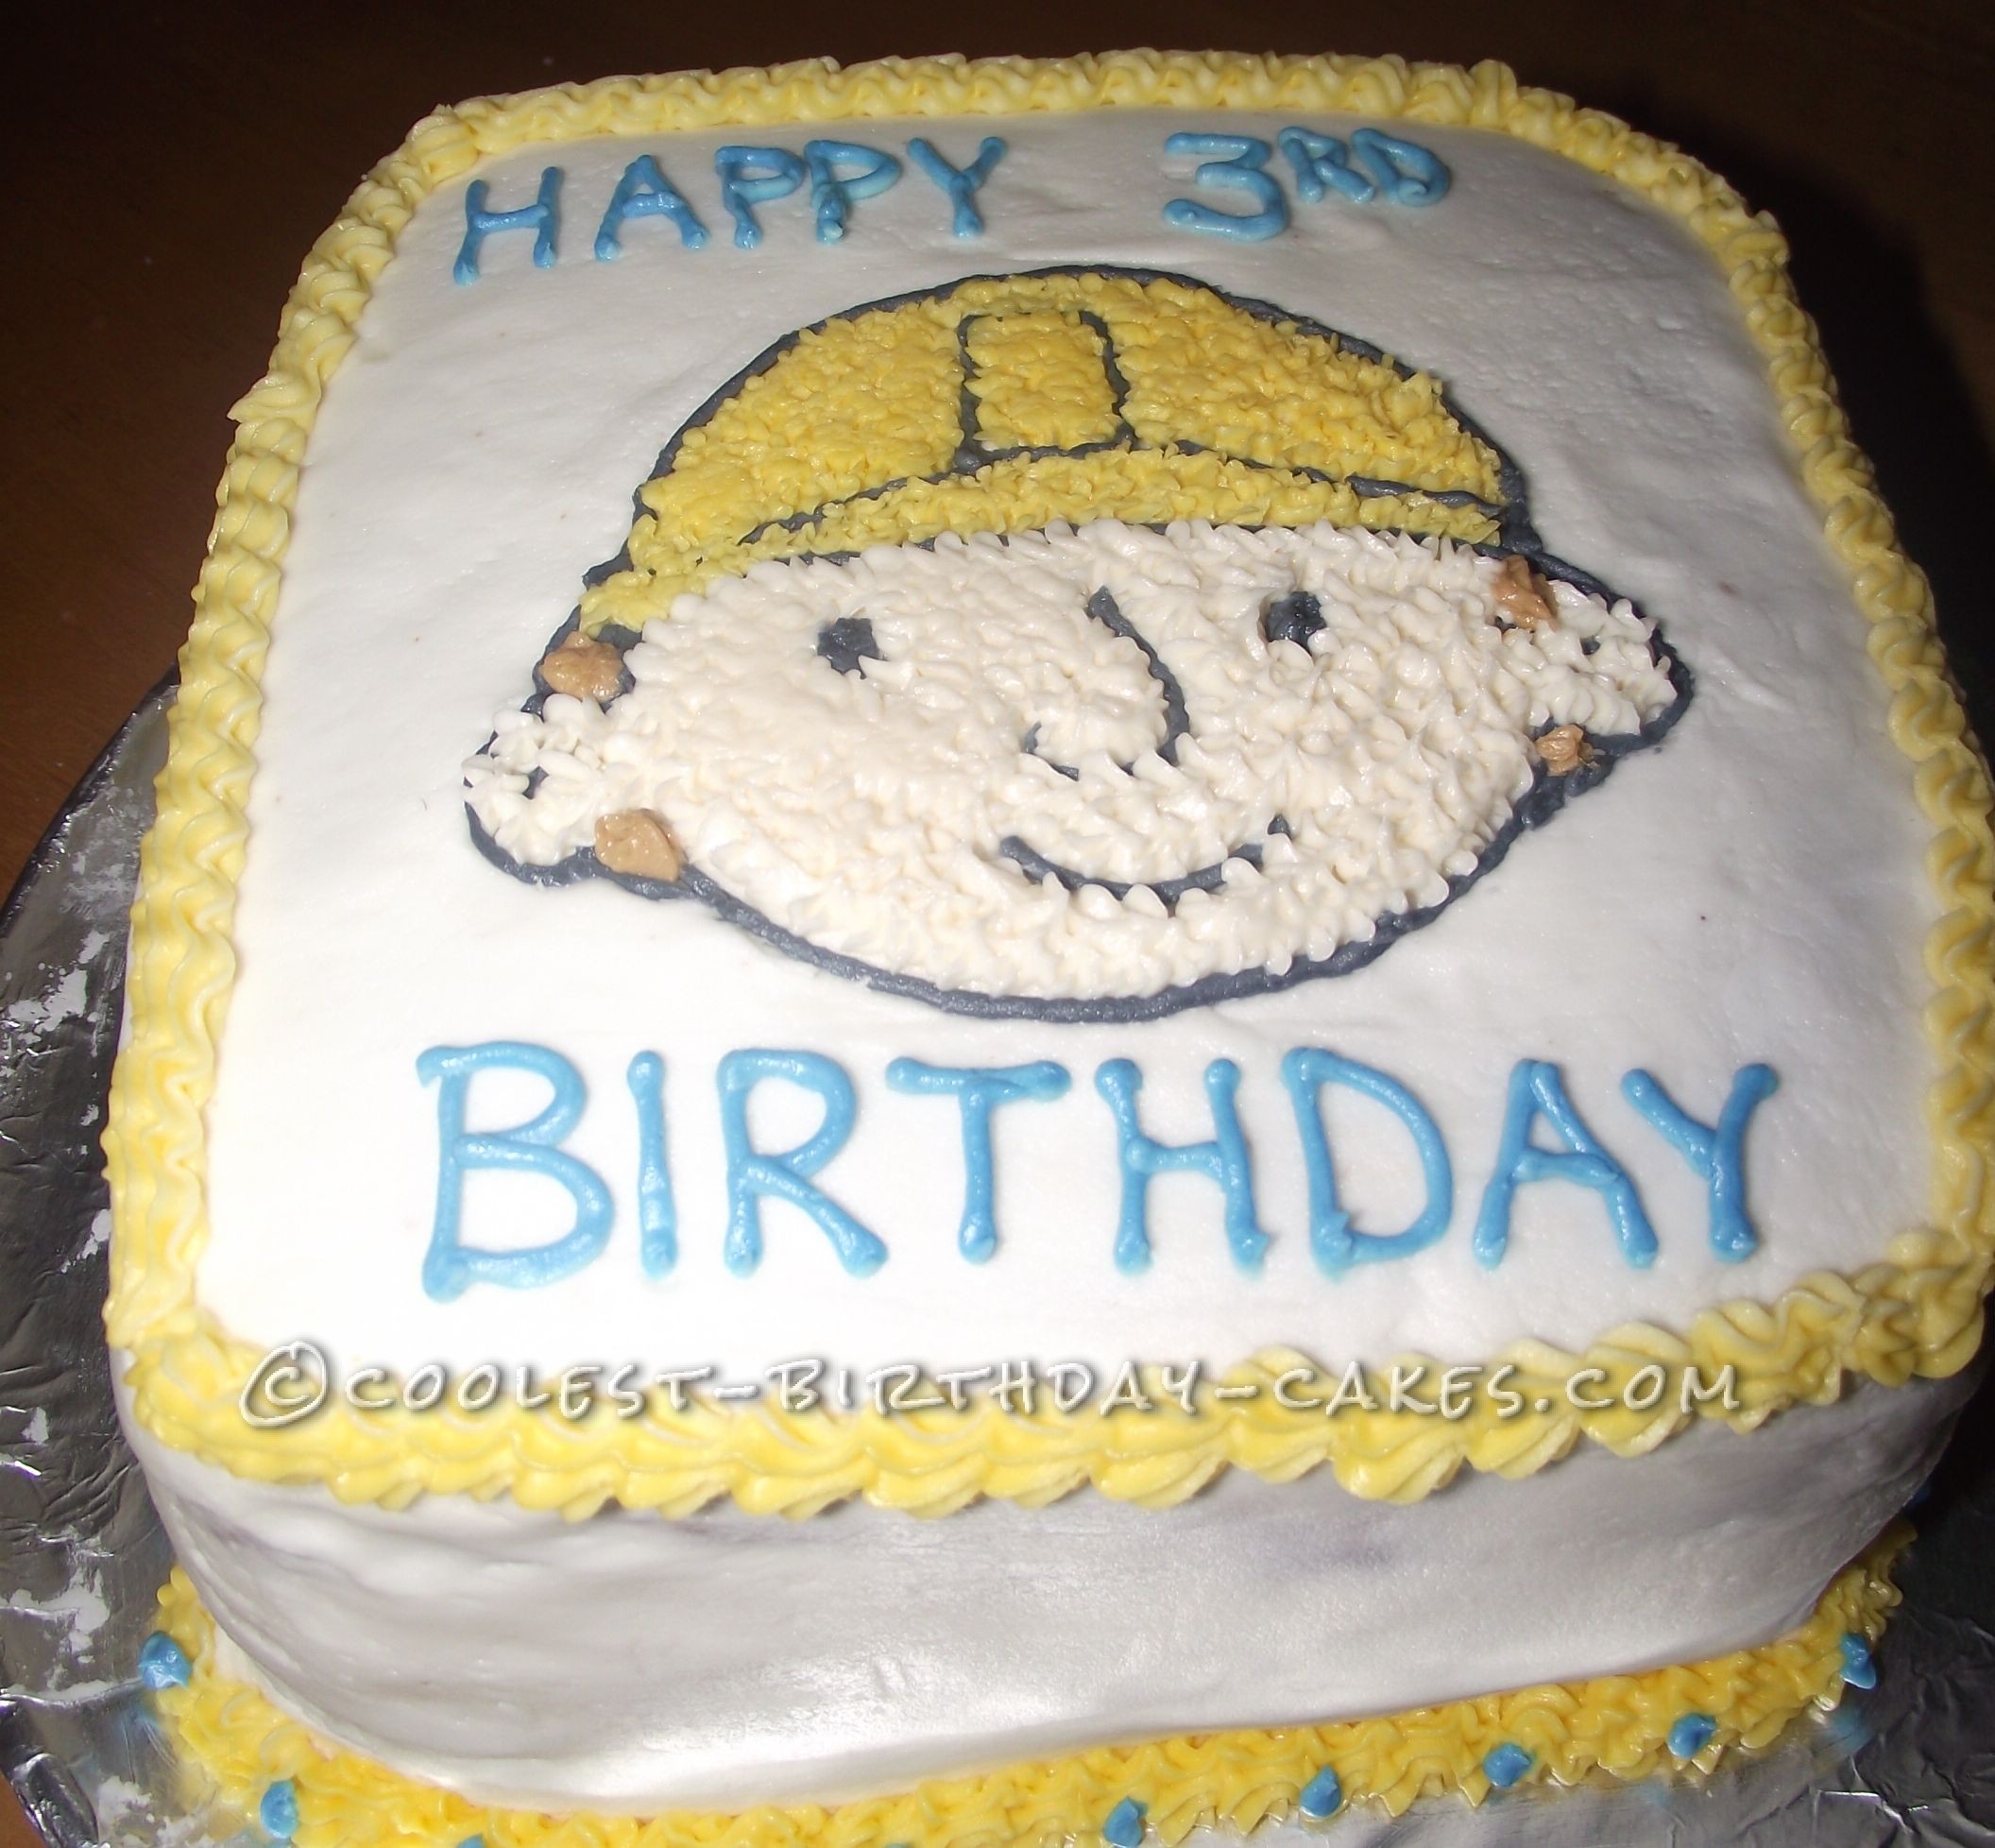 Coolest Bob the Builder Birthday Cake